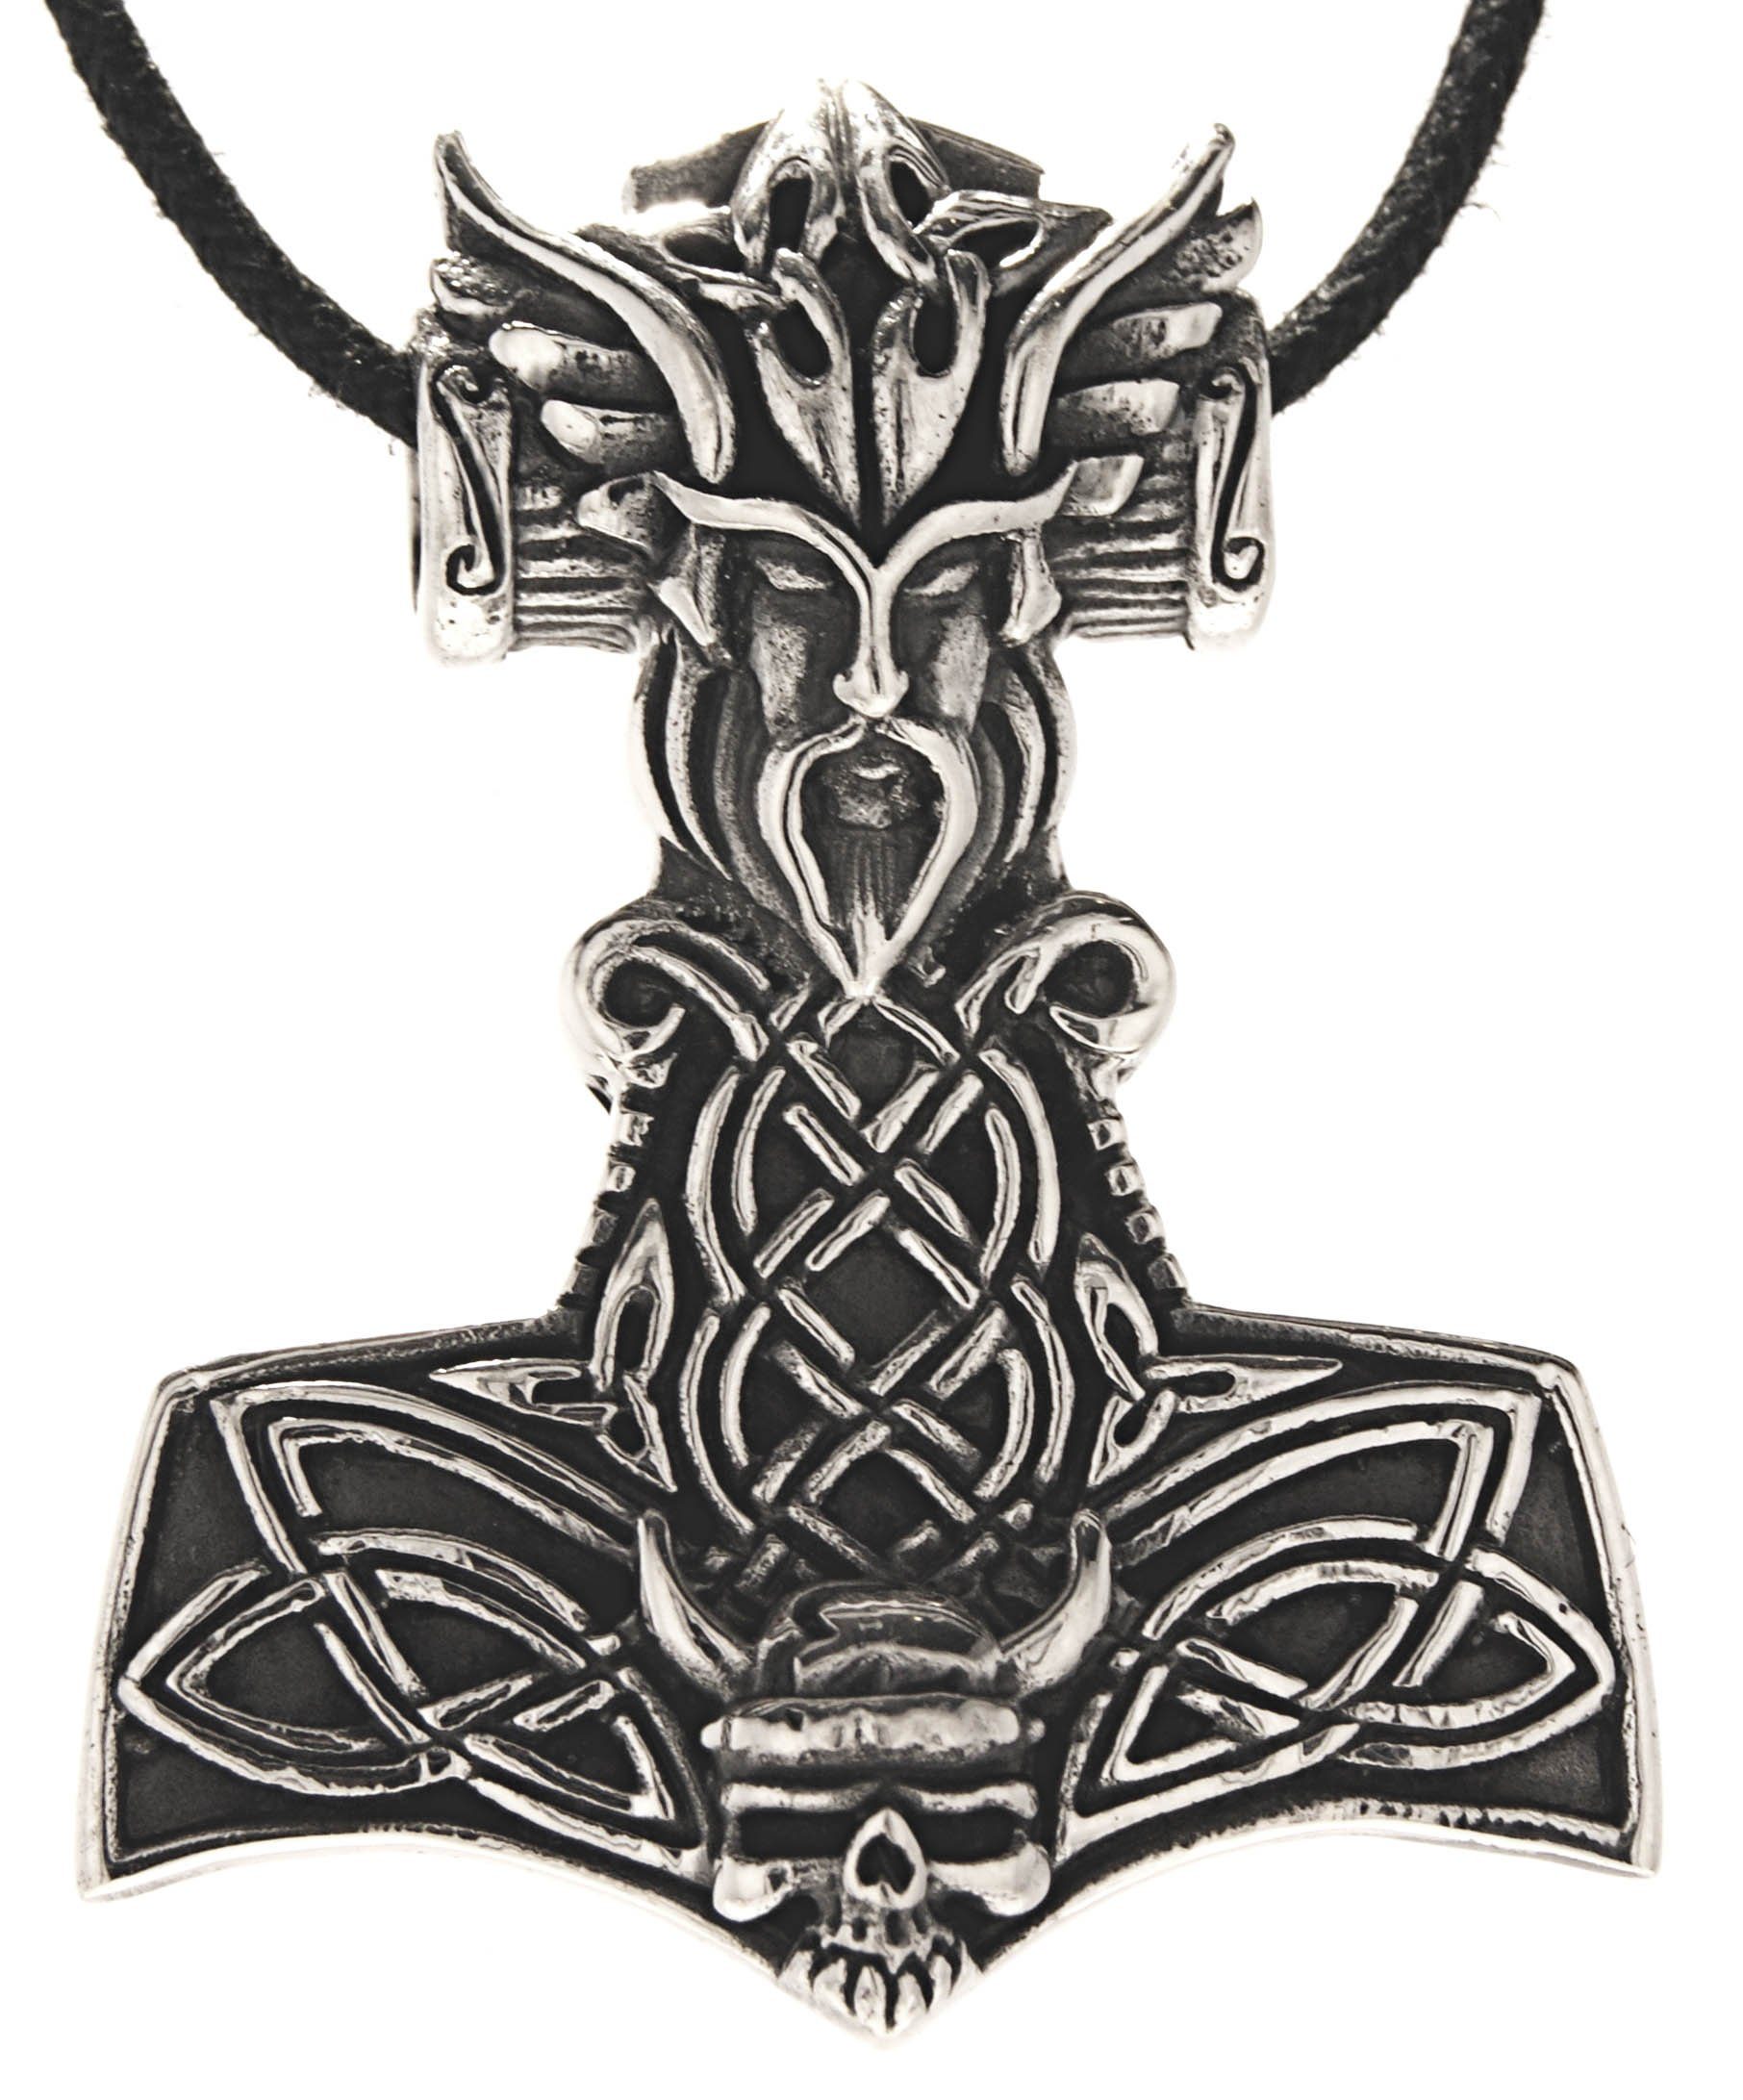 Thorshammer 925 Kiss Silber Schädel Helm Leather Wikinger of Odin Anhänger Kettenanhänger